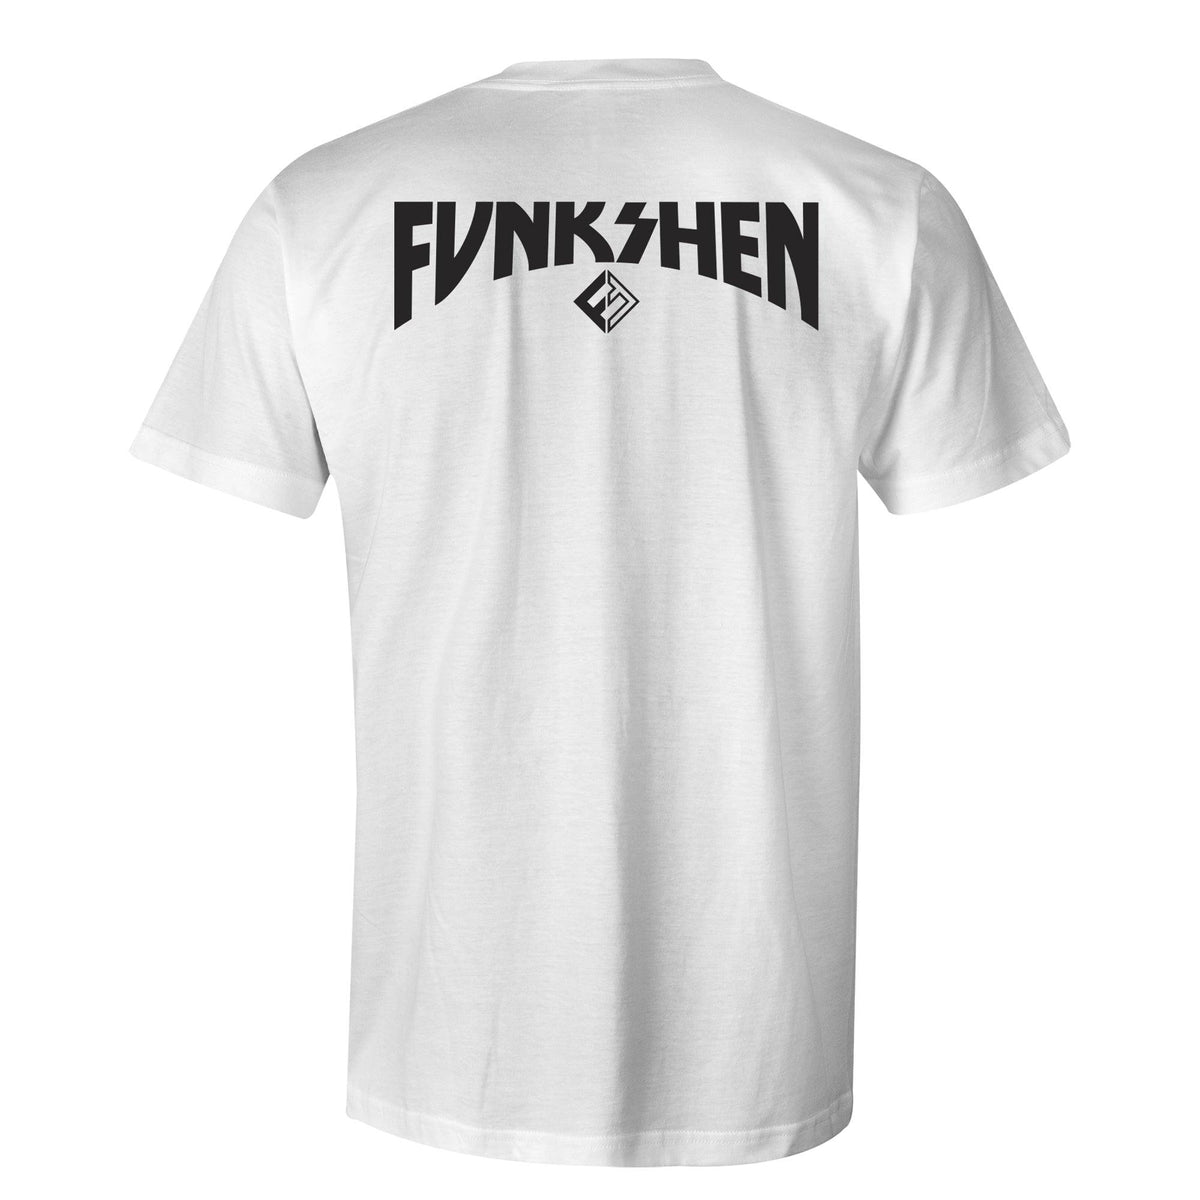 Funkshen KAOS T-Shirt - White - Funkshen Bodyboards